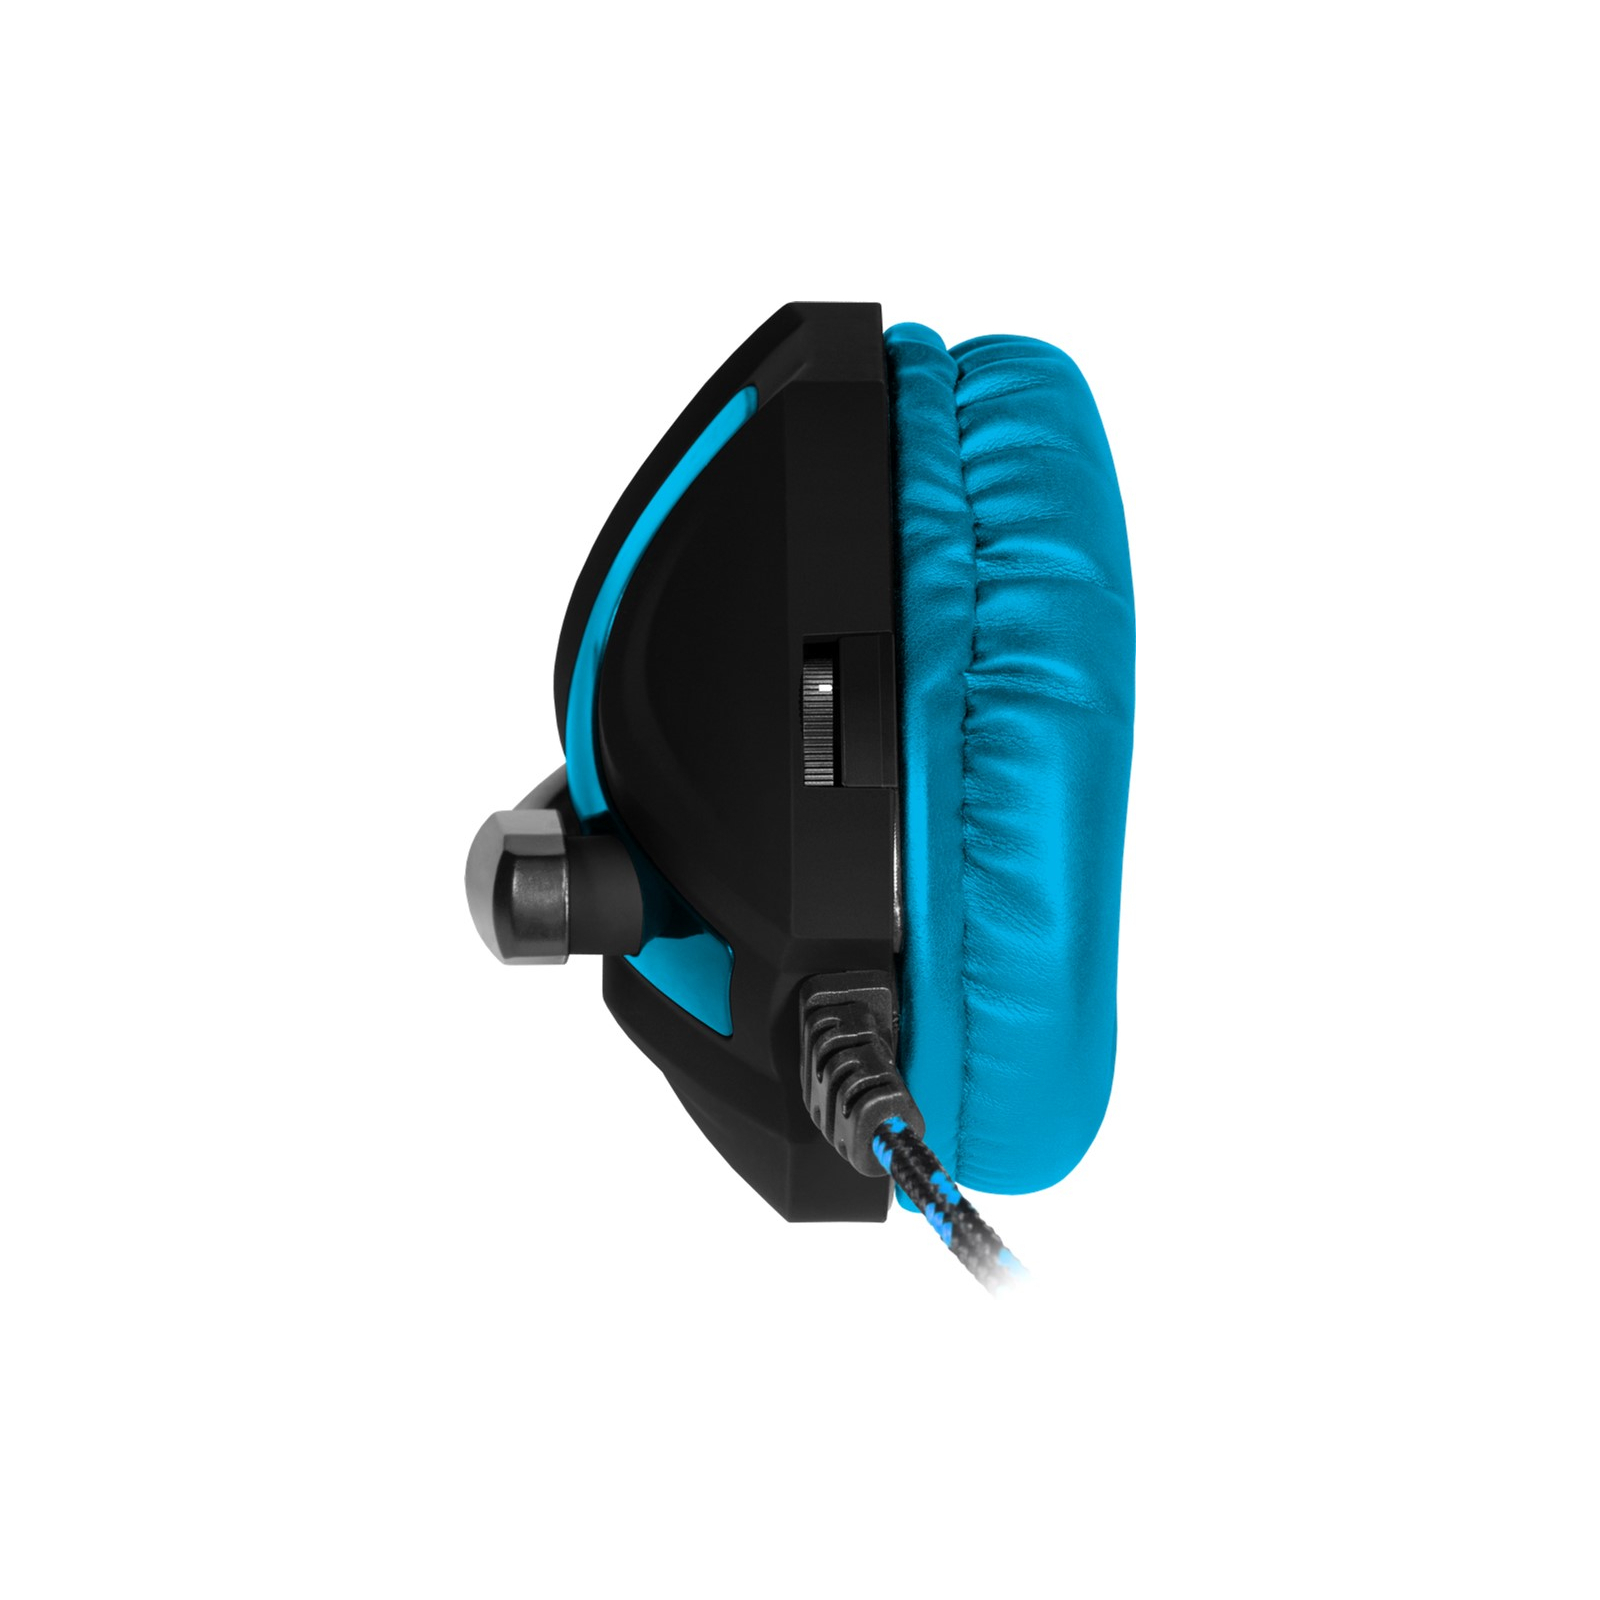 Навушники Defender Scrapper 500 Blue-Black (64501) зображення 5